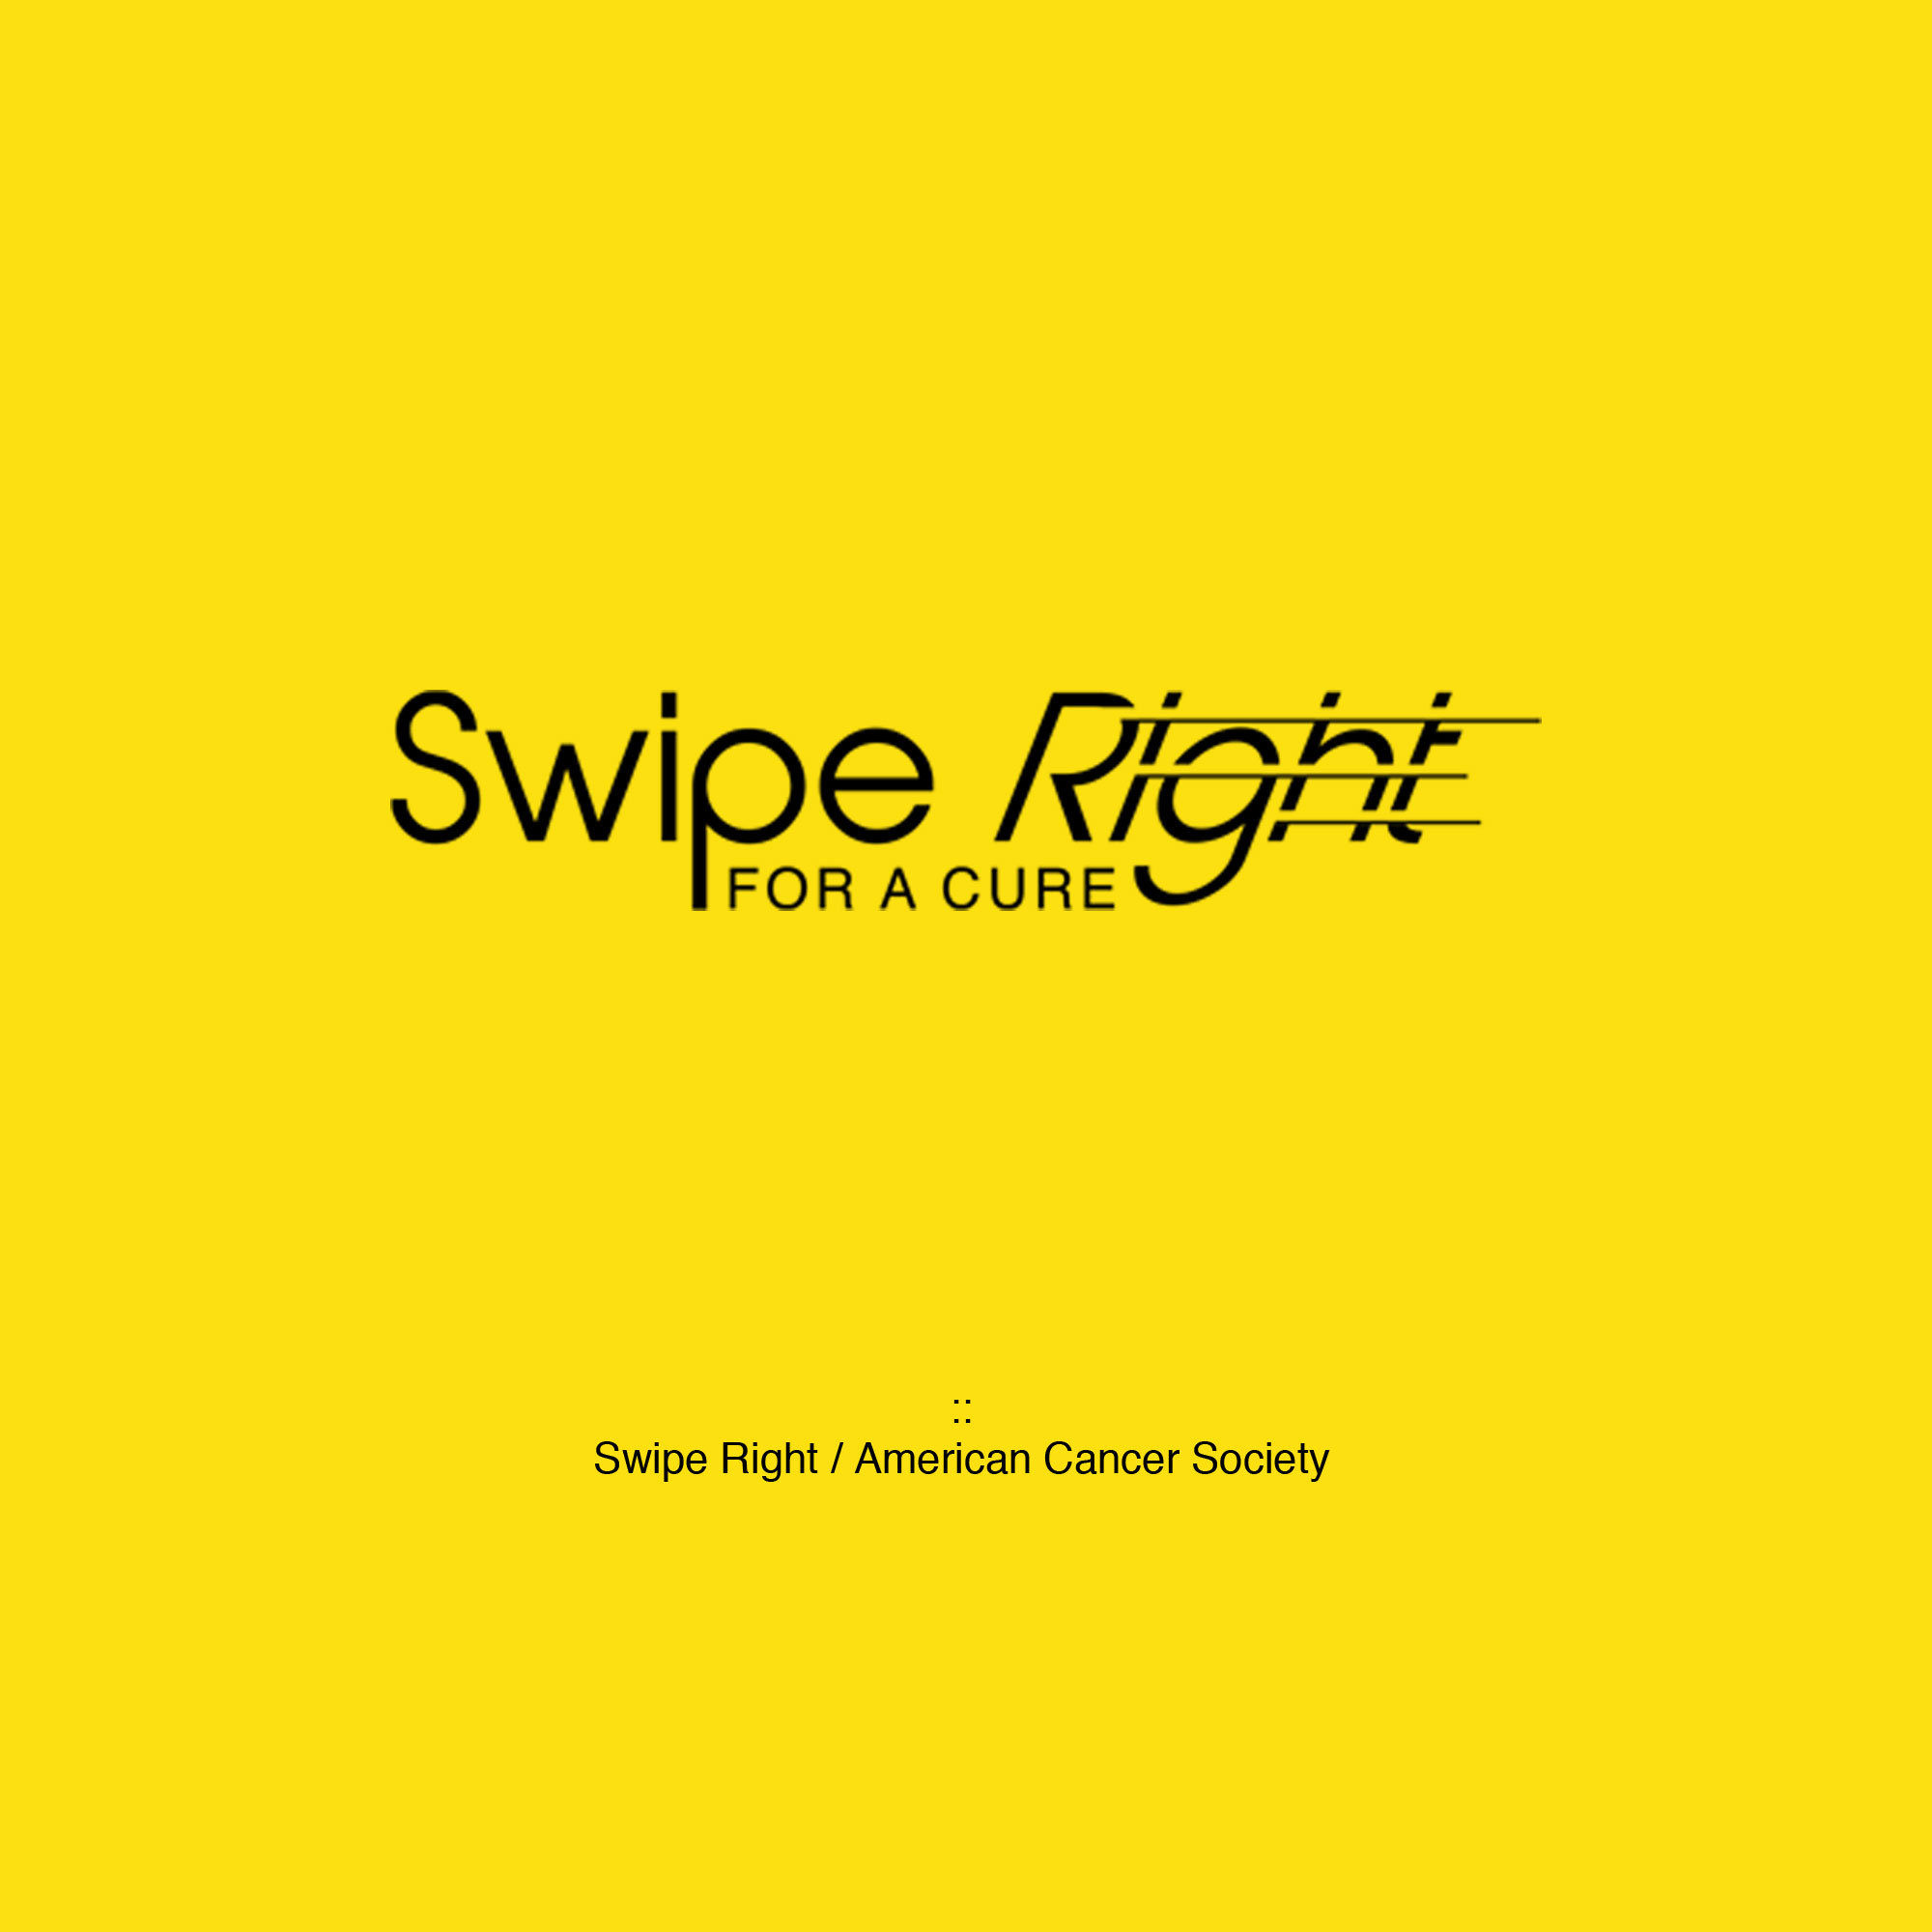 American Cancer Society / Swipe Right